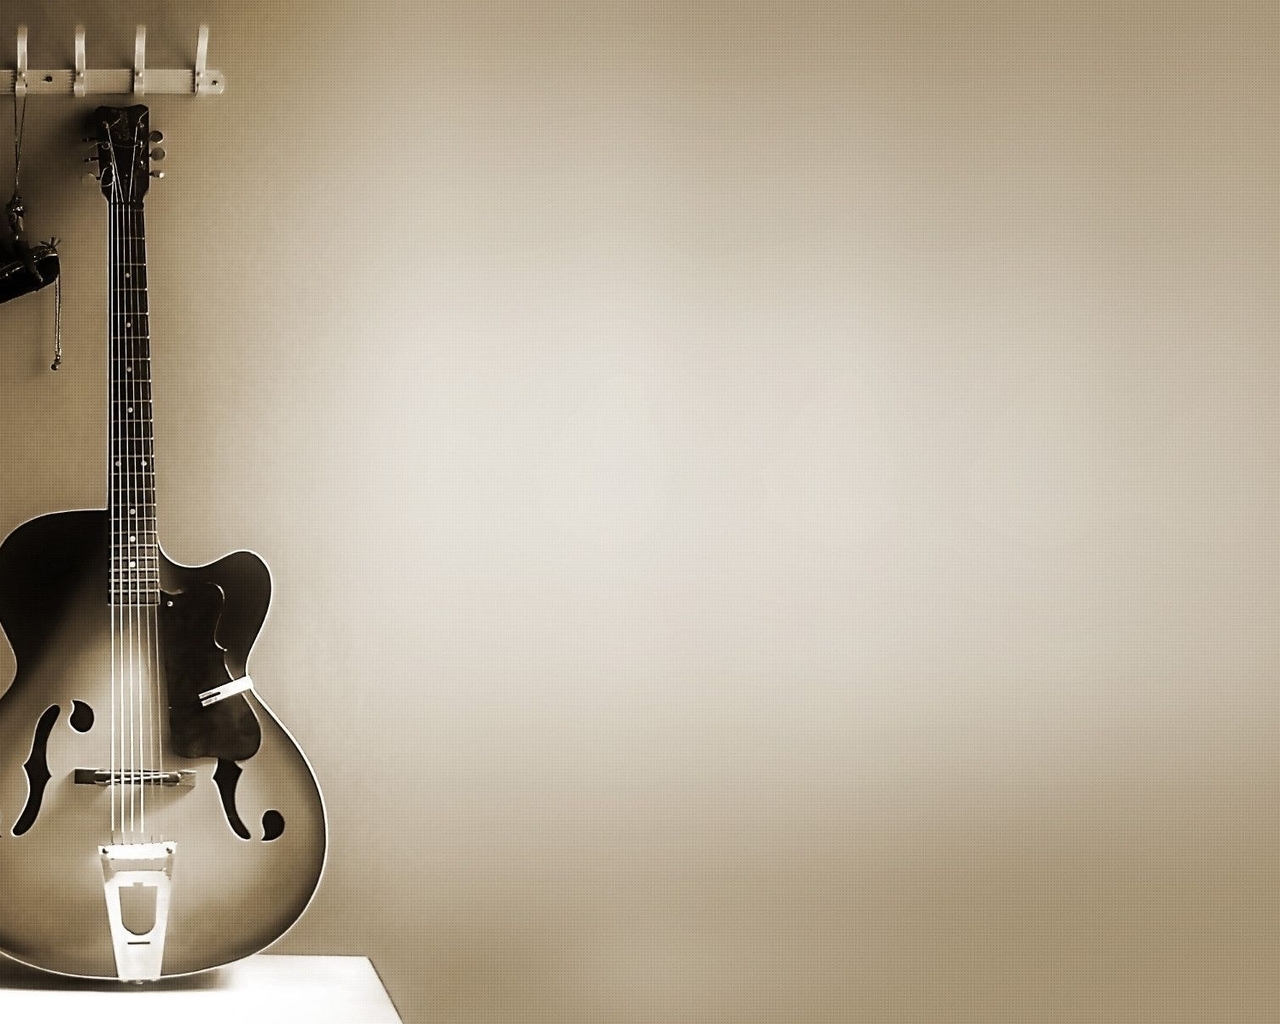 Картинка: Гитара, струны, стена, серый фон